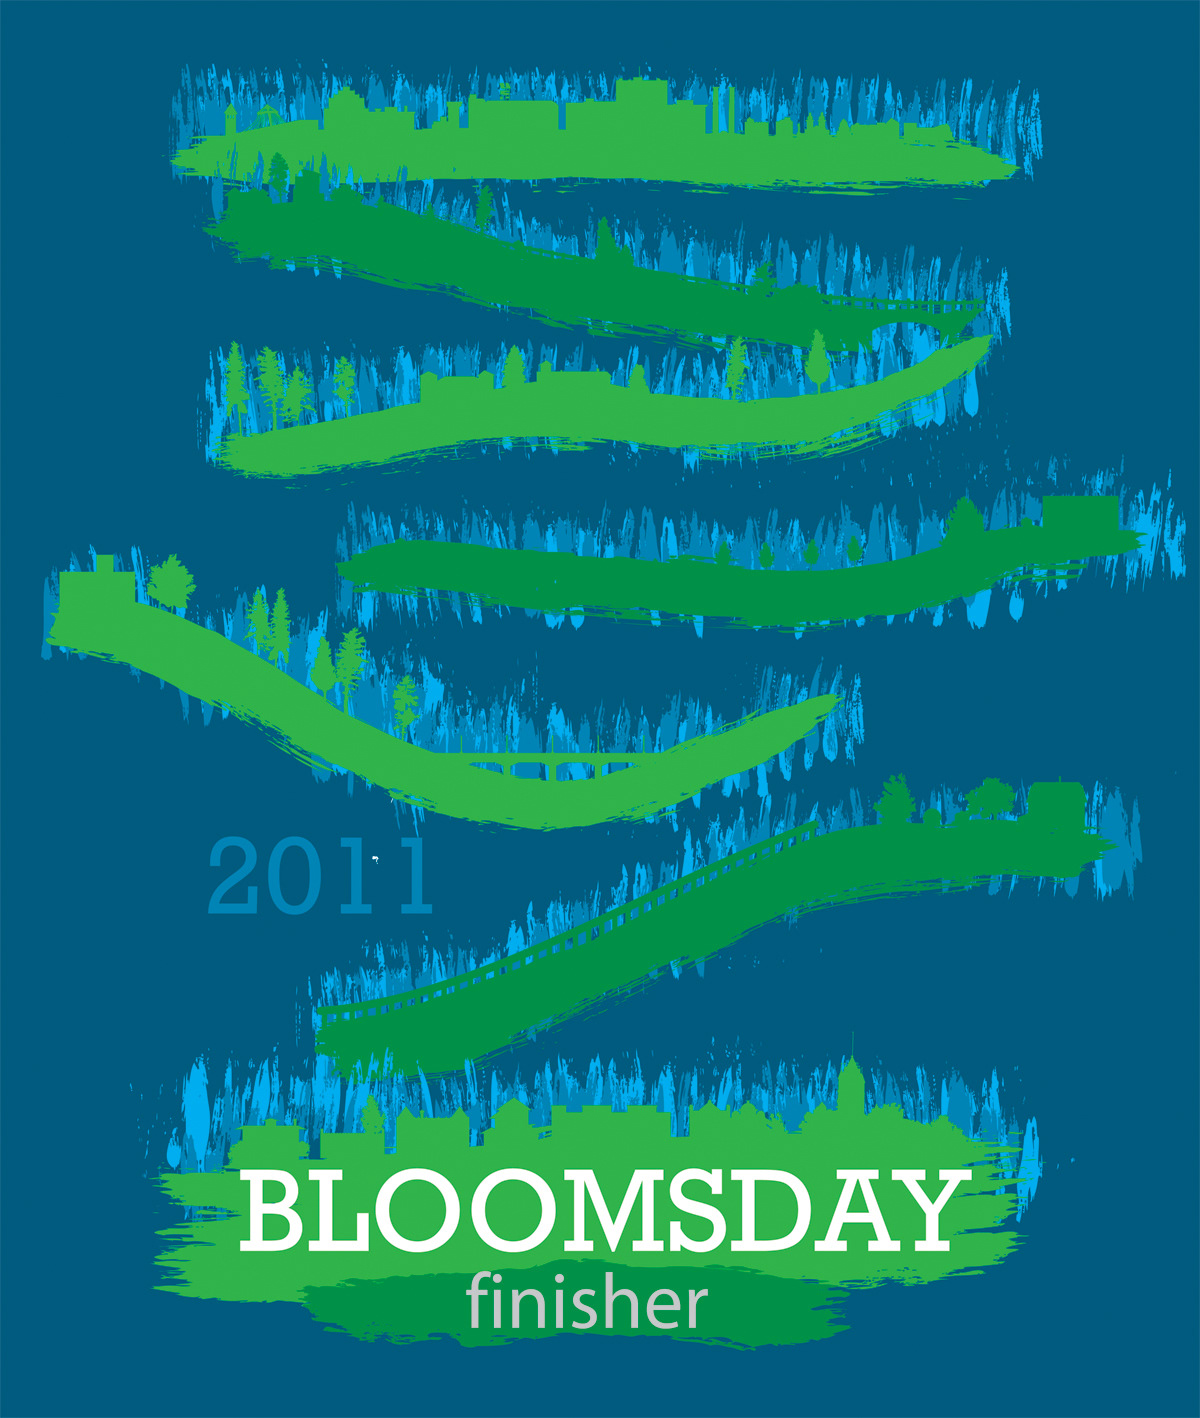 Bloomsday t-shirt graphic Spokane Washington Idaho coeur d' alene fun run race lilac